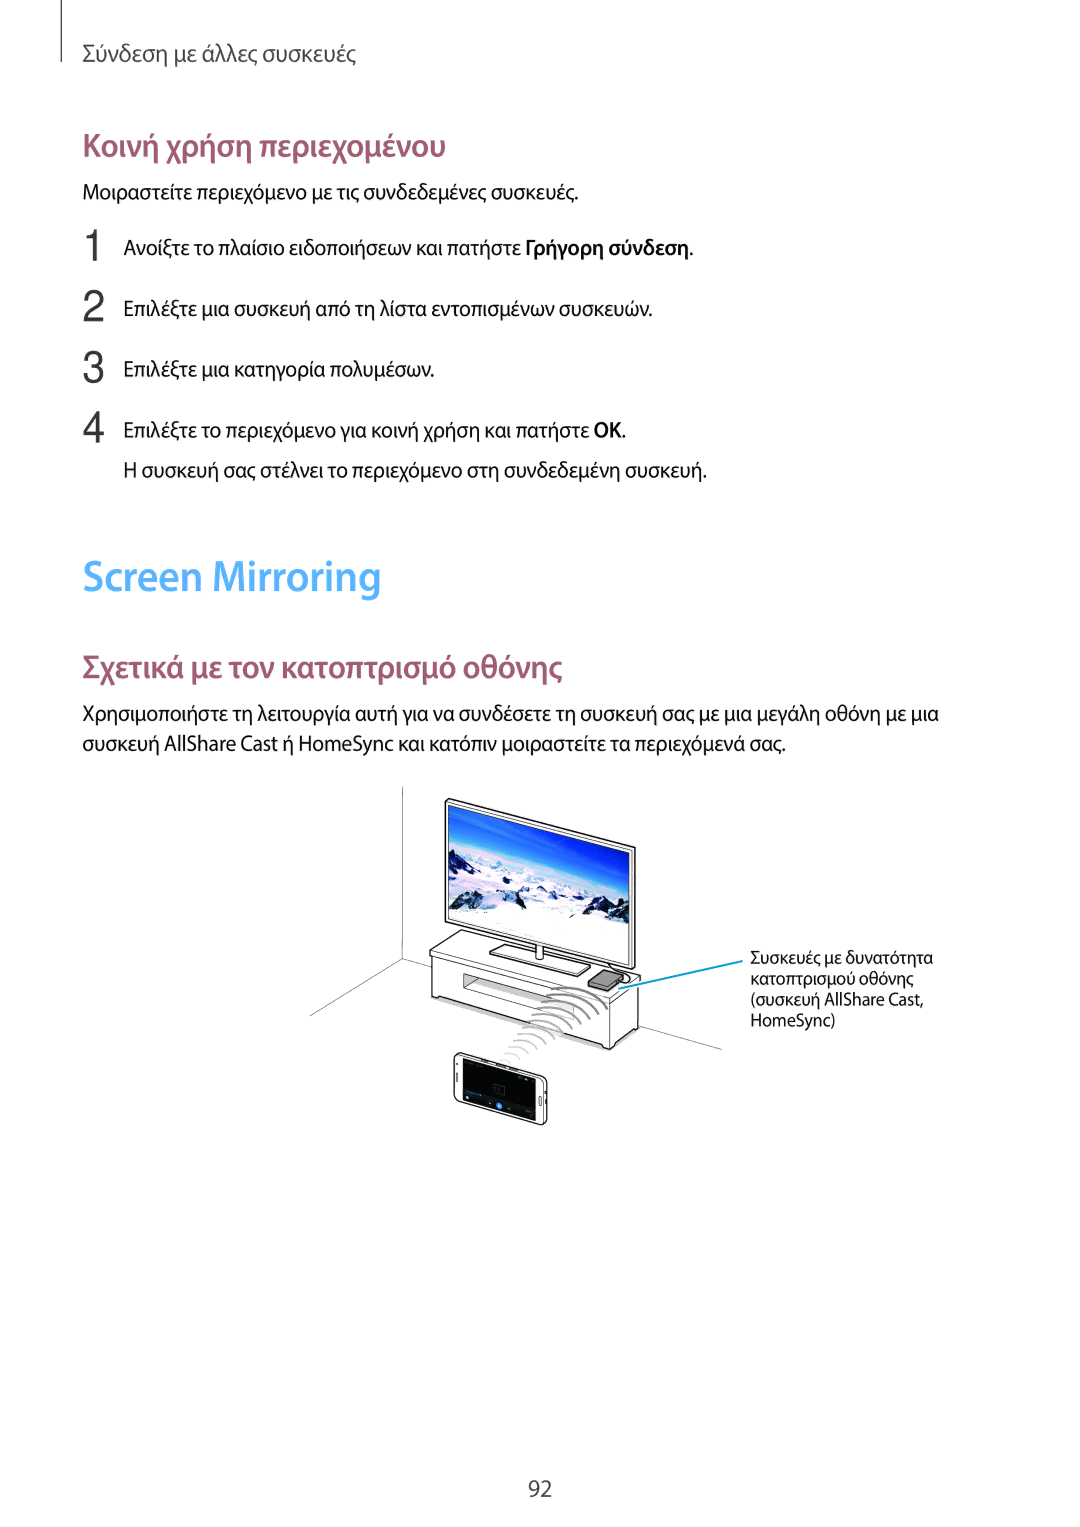 Samsung SM-A300FZKUVGR, SM-A300FZWUVGR manual Screen Mirroring, Κοινή χρήση περιεχομένου, Σχετικά με τον κατοπτρισμό οθόνης 